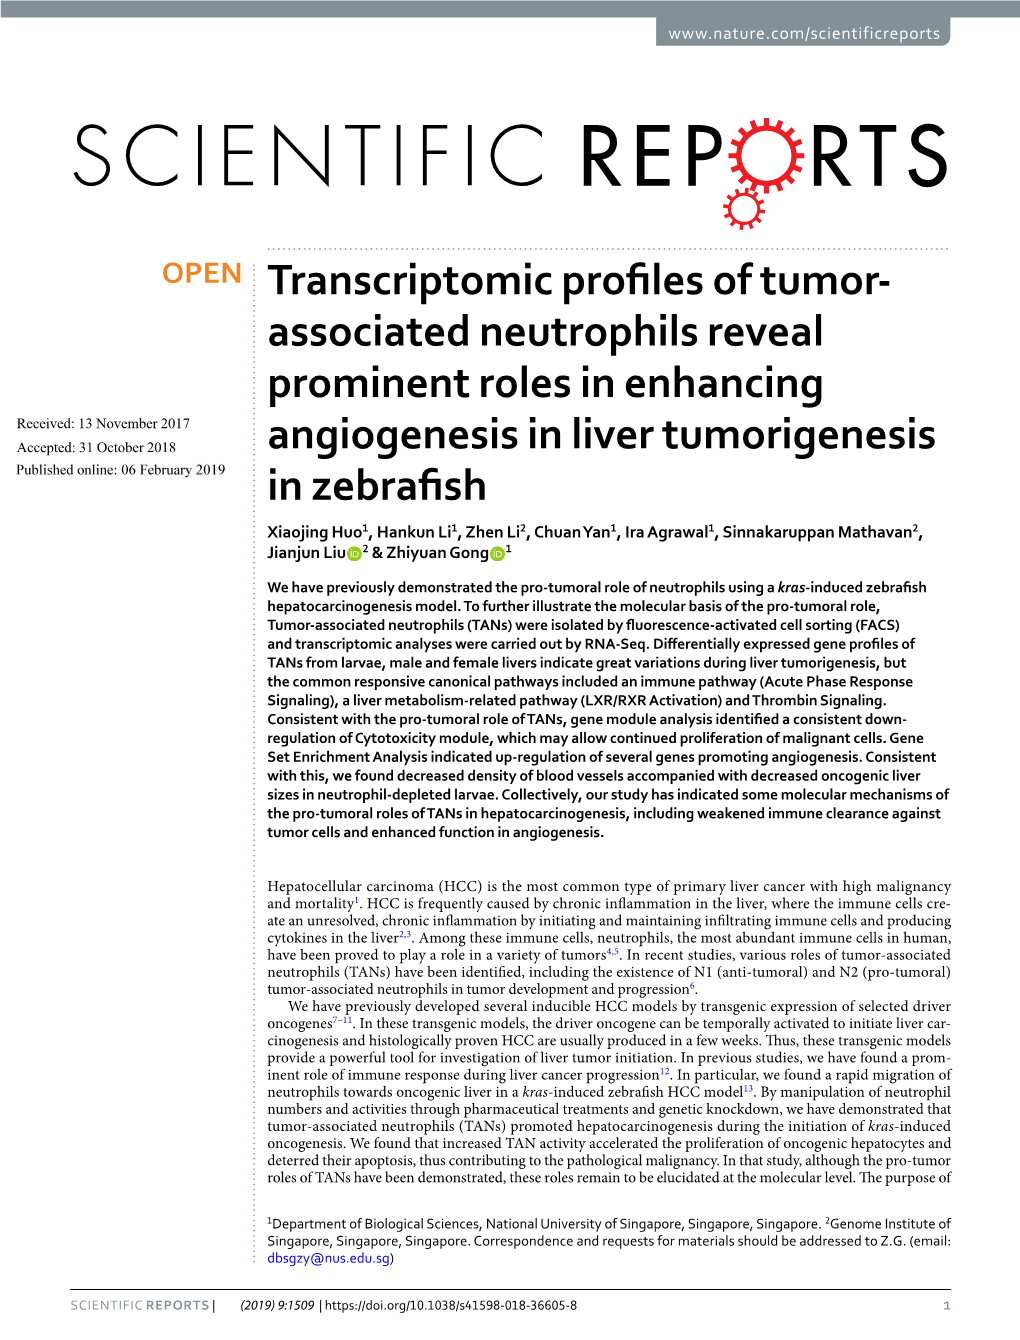 Transcriptomic Profiles of Tumor-Associated Neutrophils Reveal